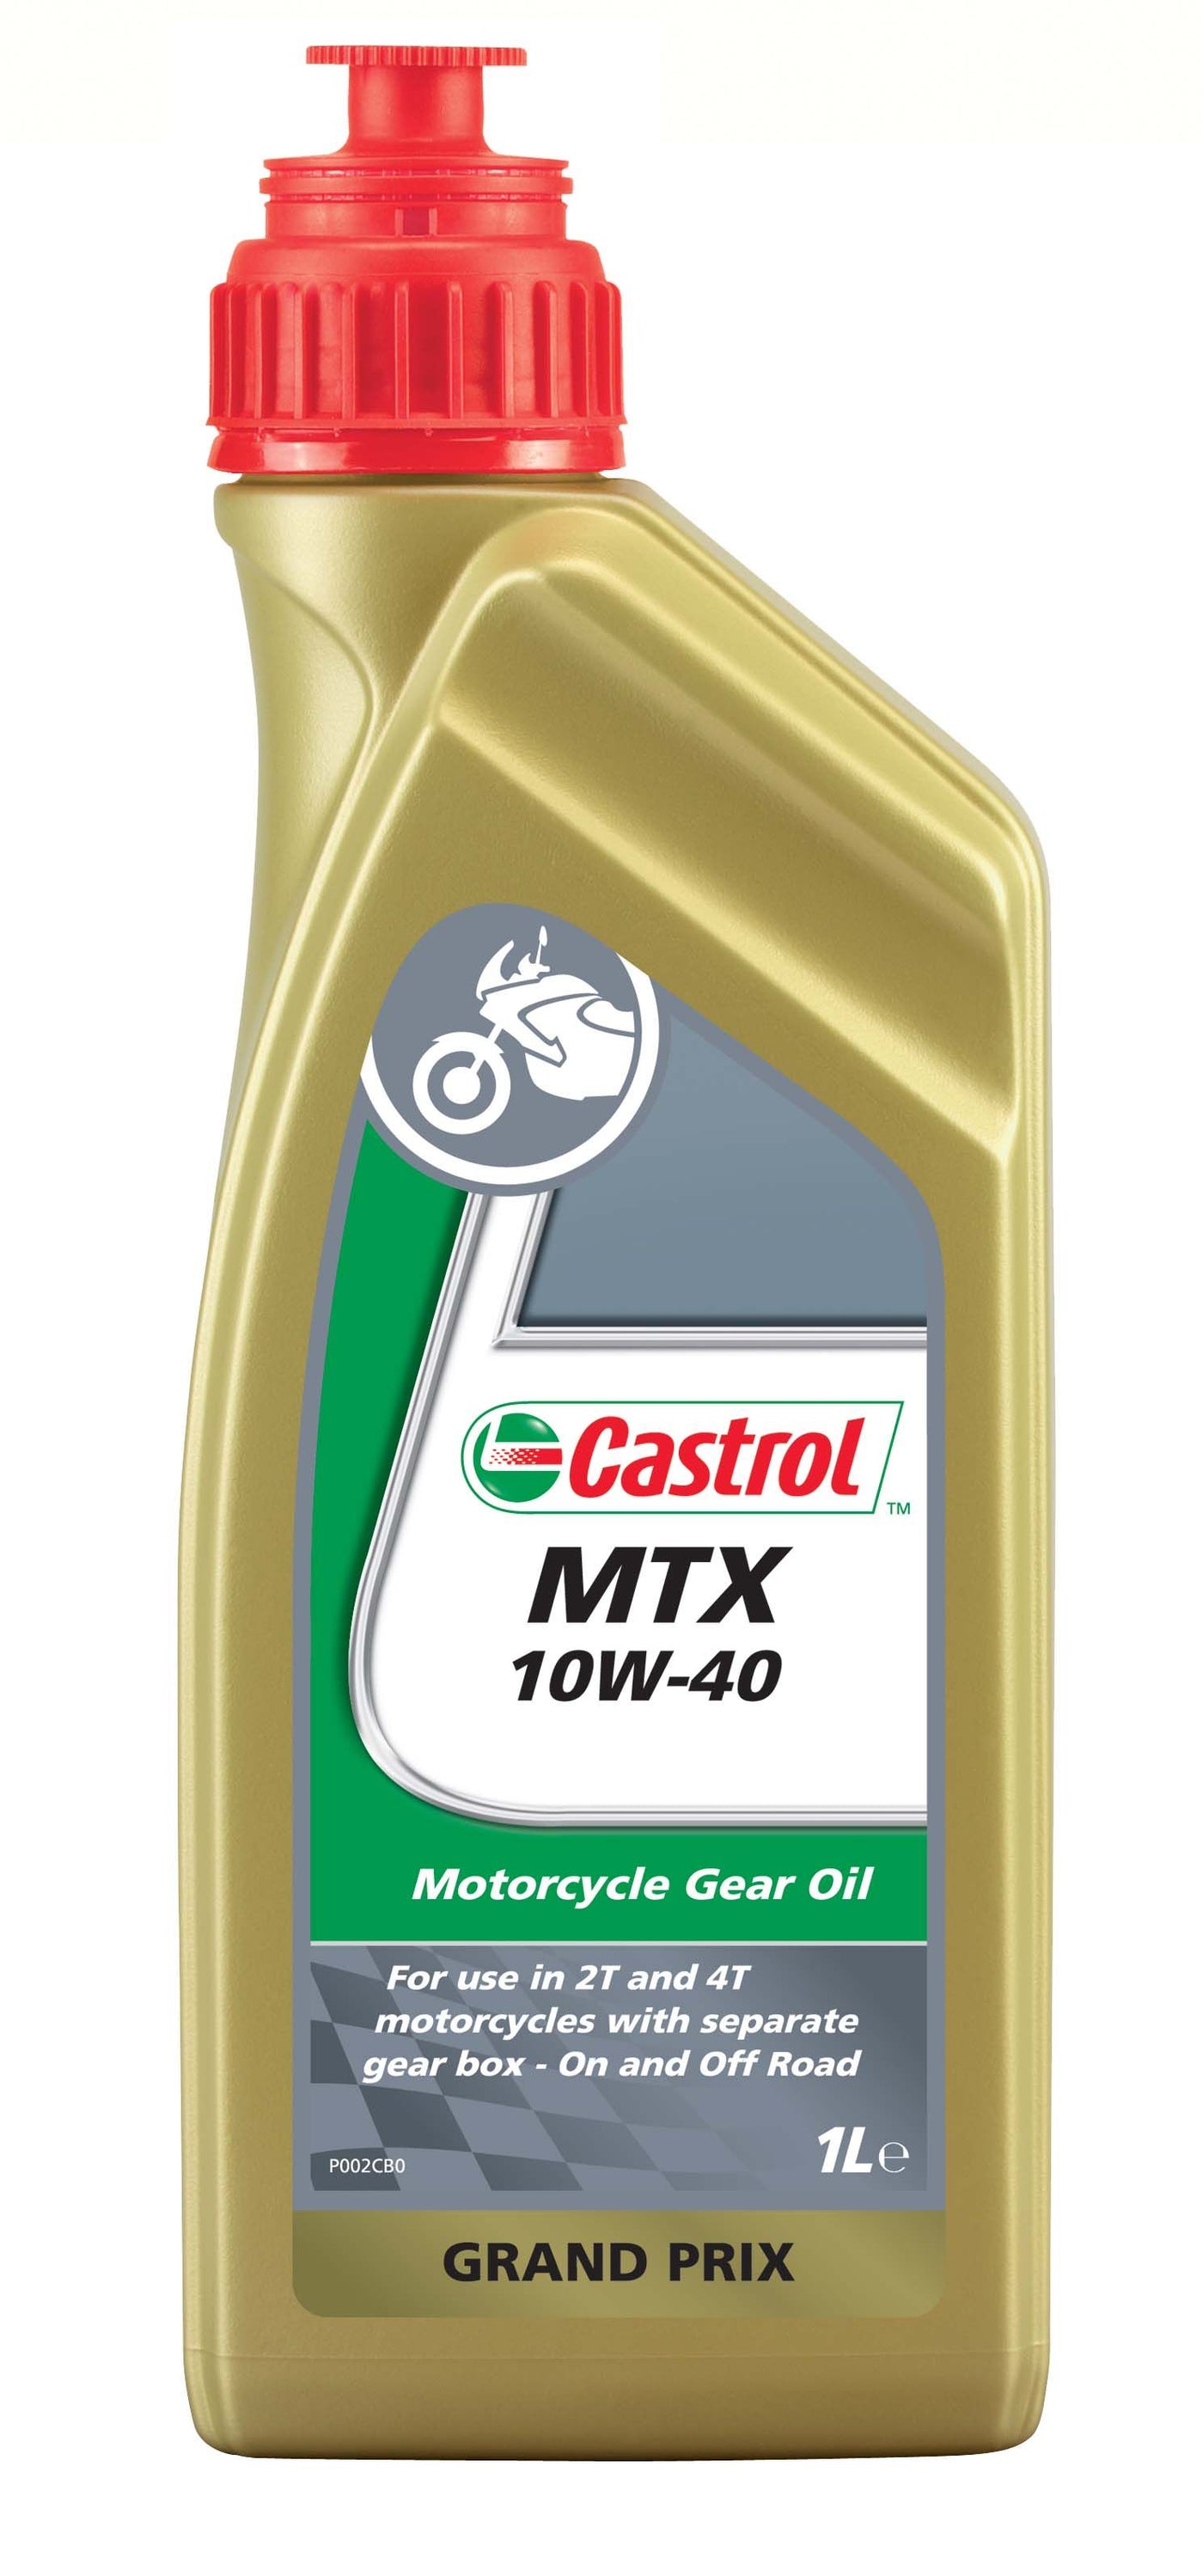 Olje, Castrol MTX, 1 Liter, 10W/40